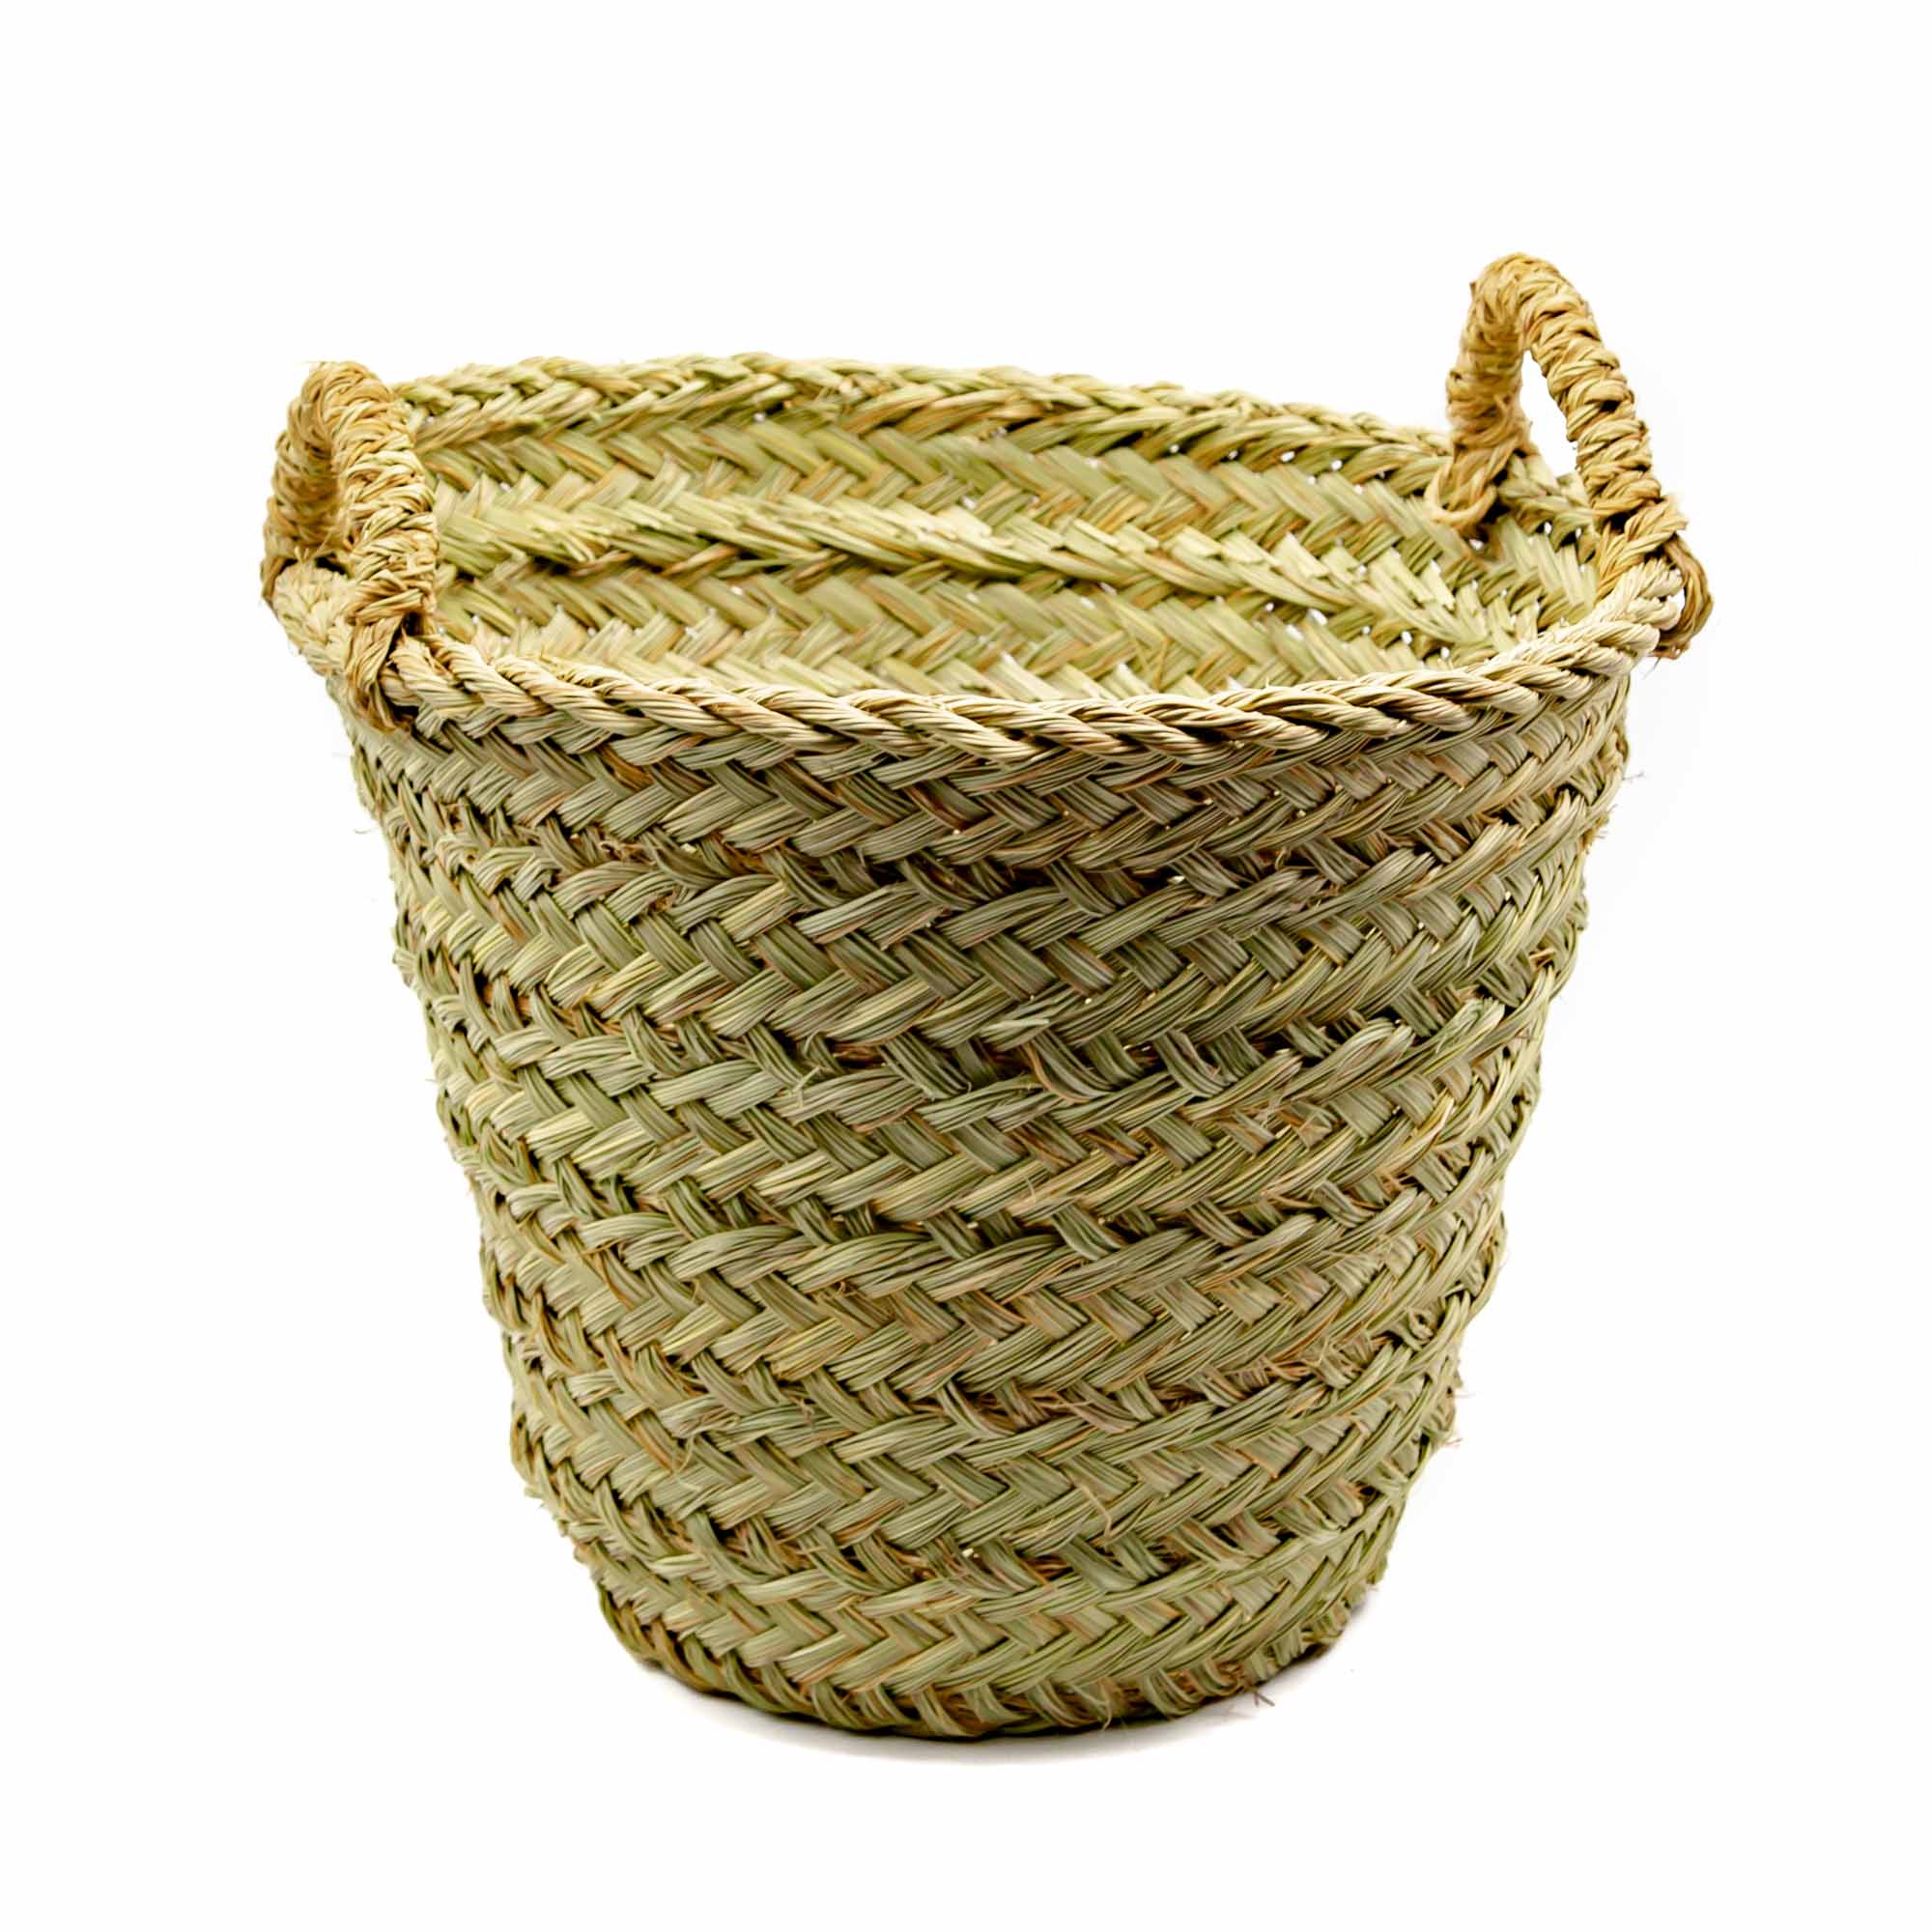 Handmade Palm Leaf Basket - Mortise And Tenon